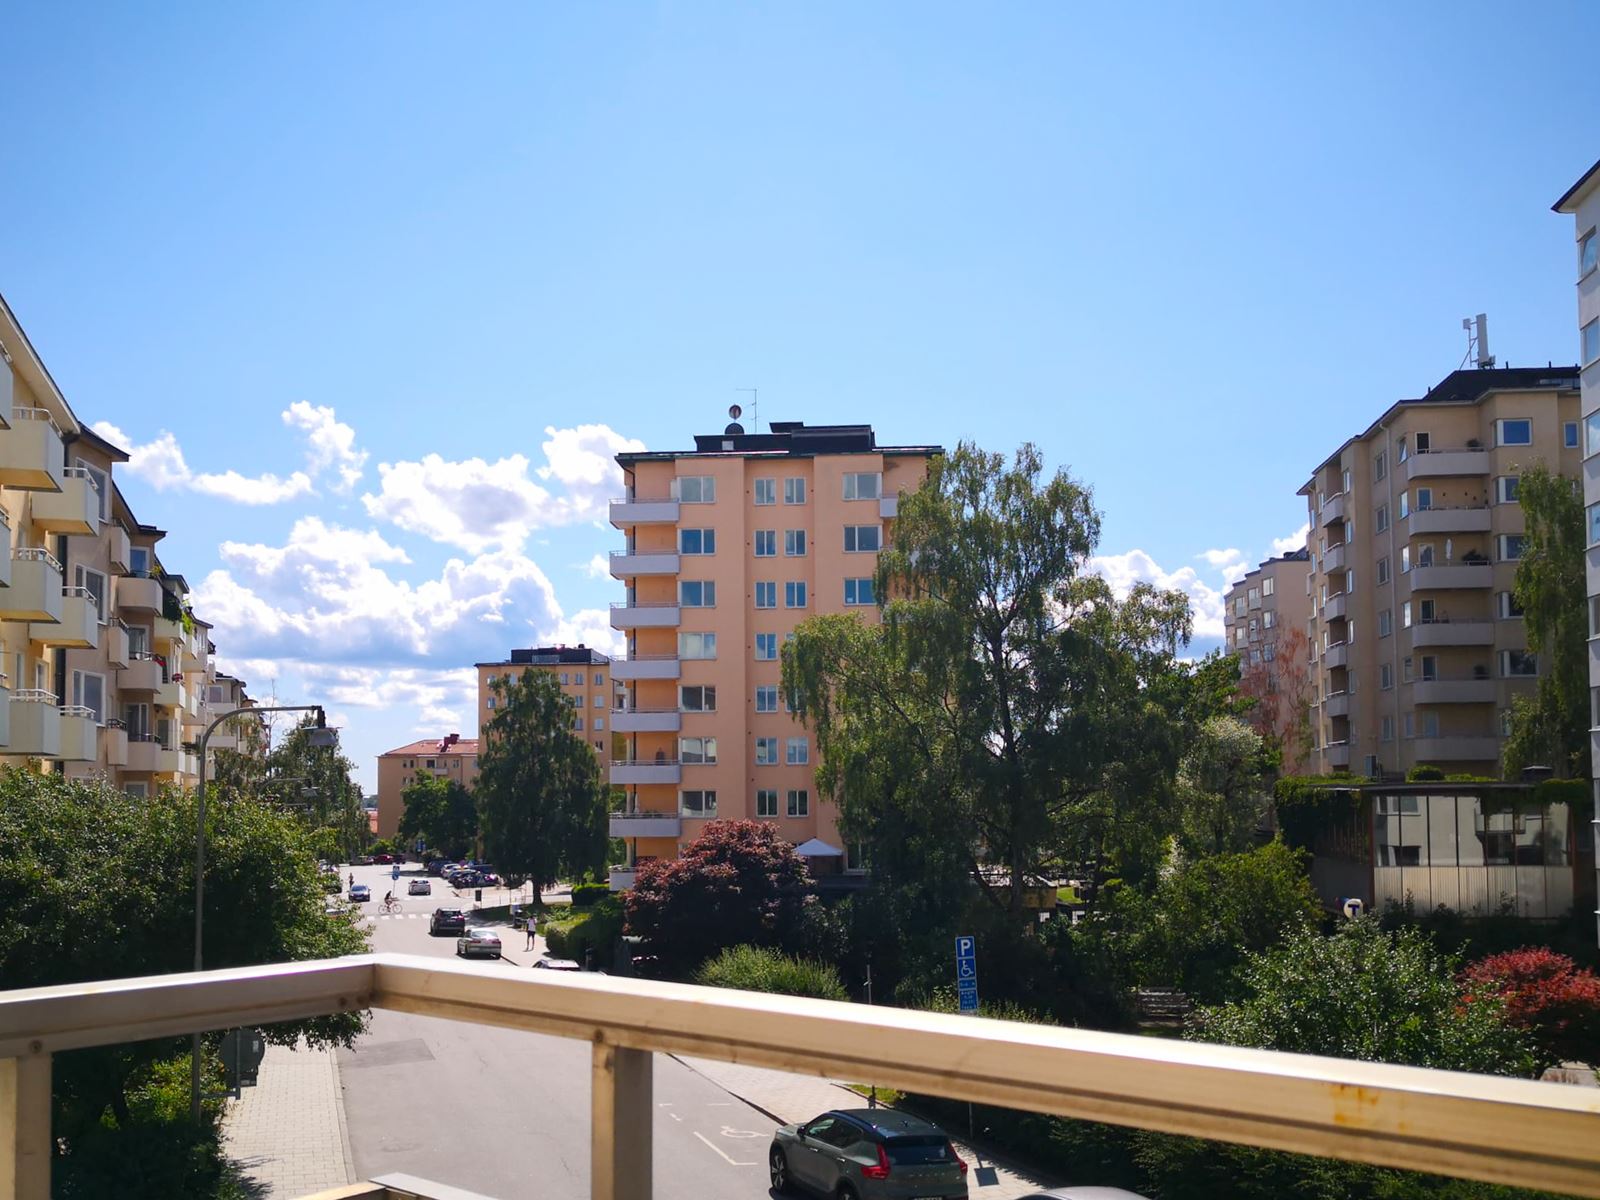 Säljarens bild från balkongen som vetter mot Smedsbacksgatan sommartid. Smedsbacksgatan 10 - Bjurfors